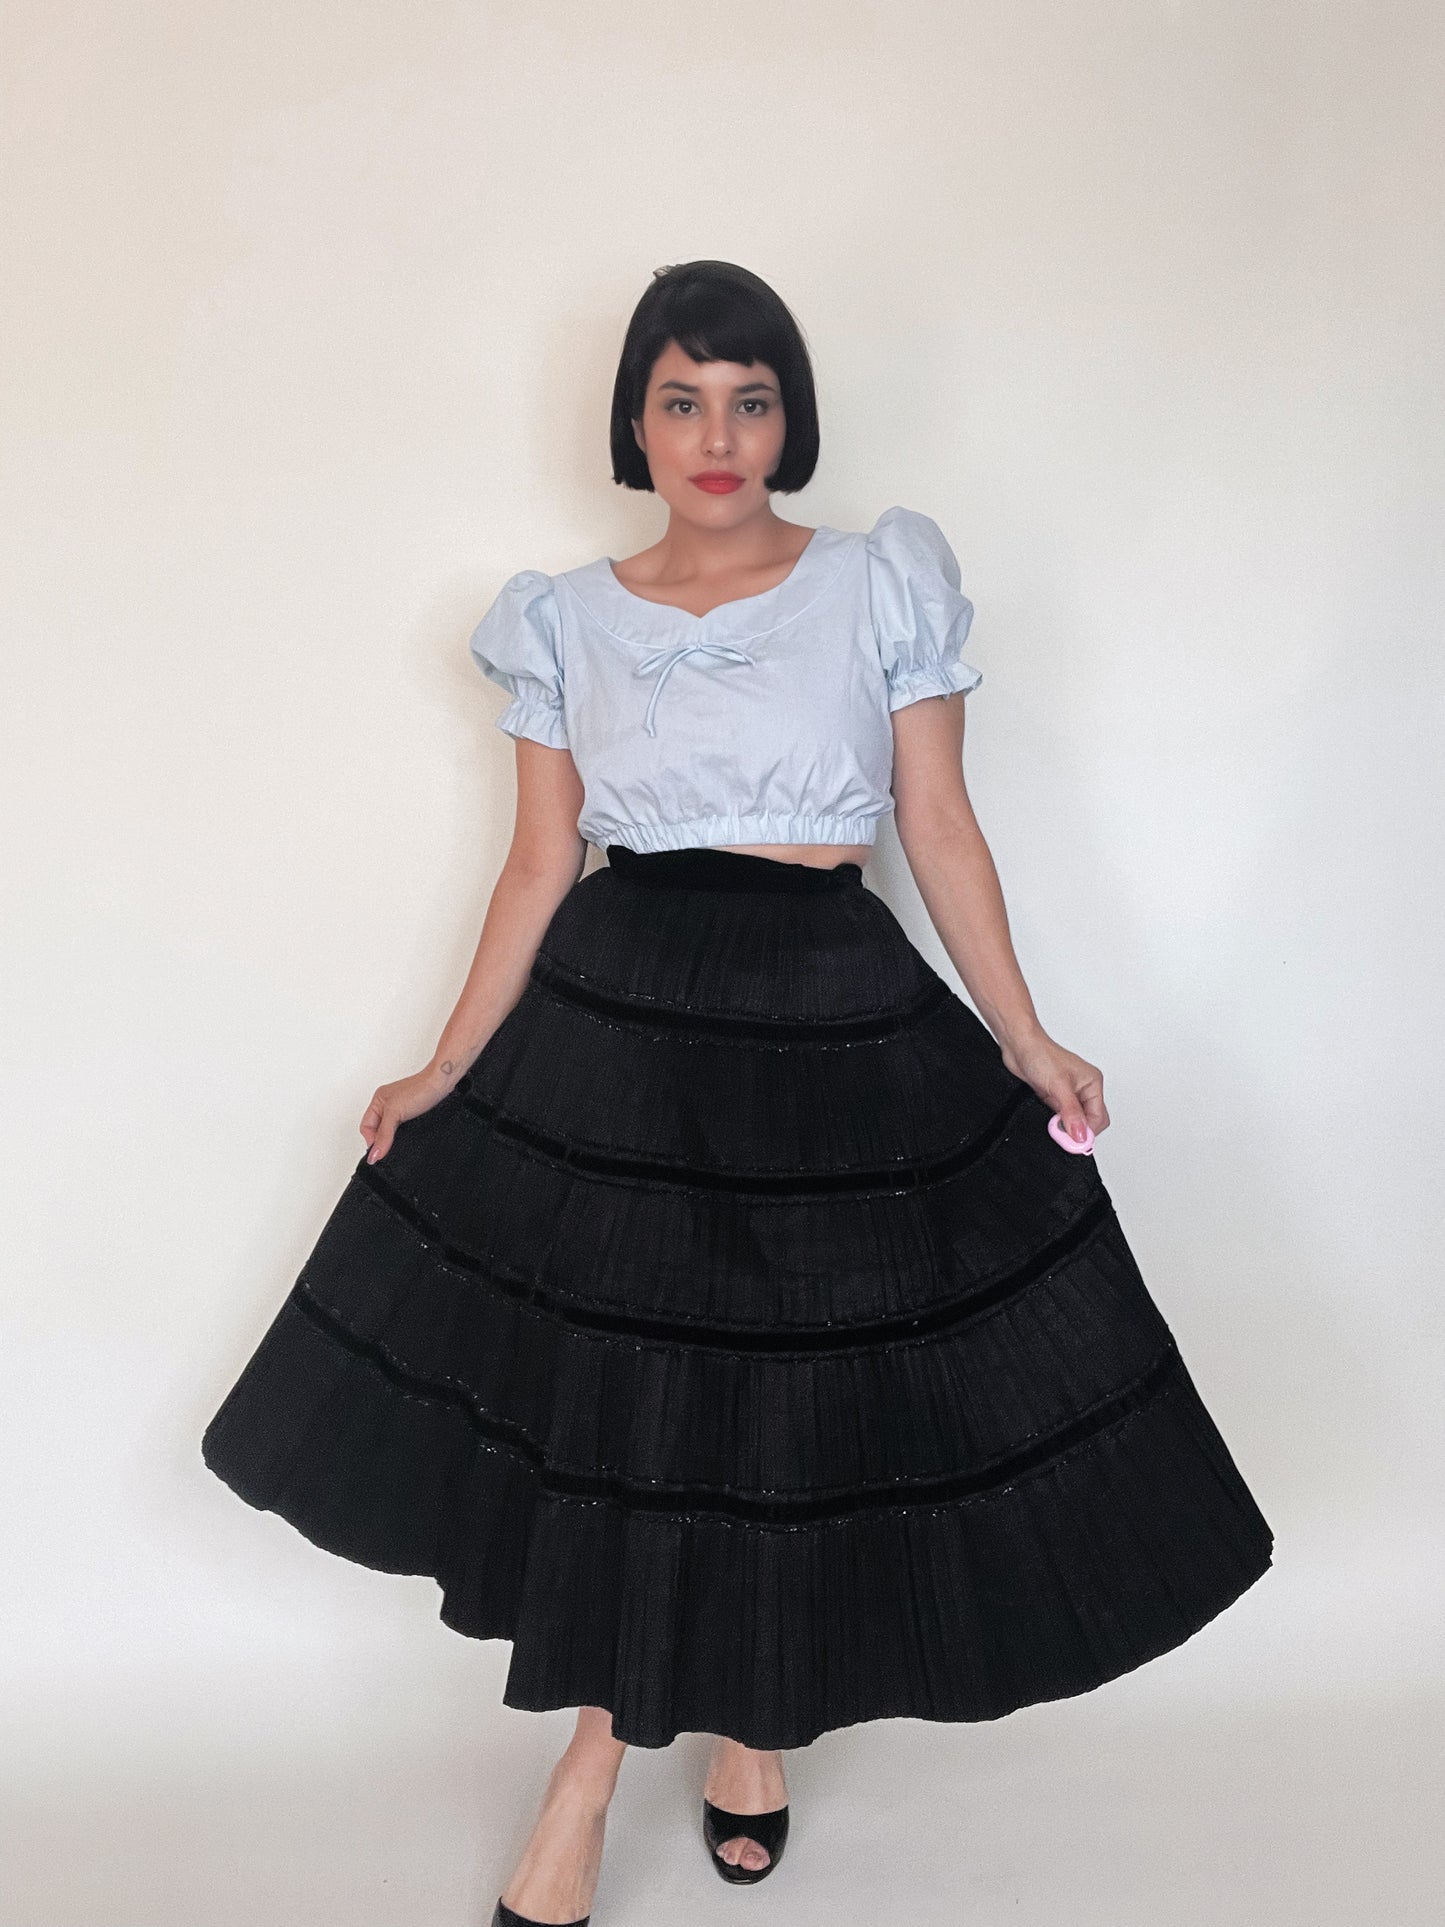 Vintage 50s / 60s Accordion Black A-Line Skirt Fits Sizes XS-SM